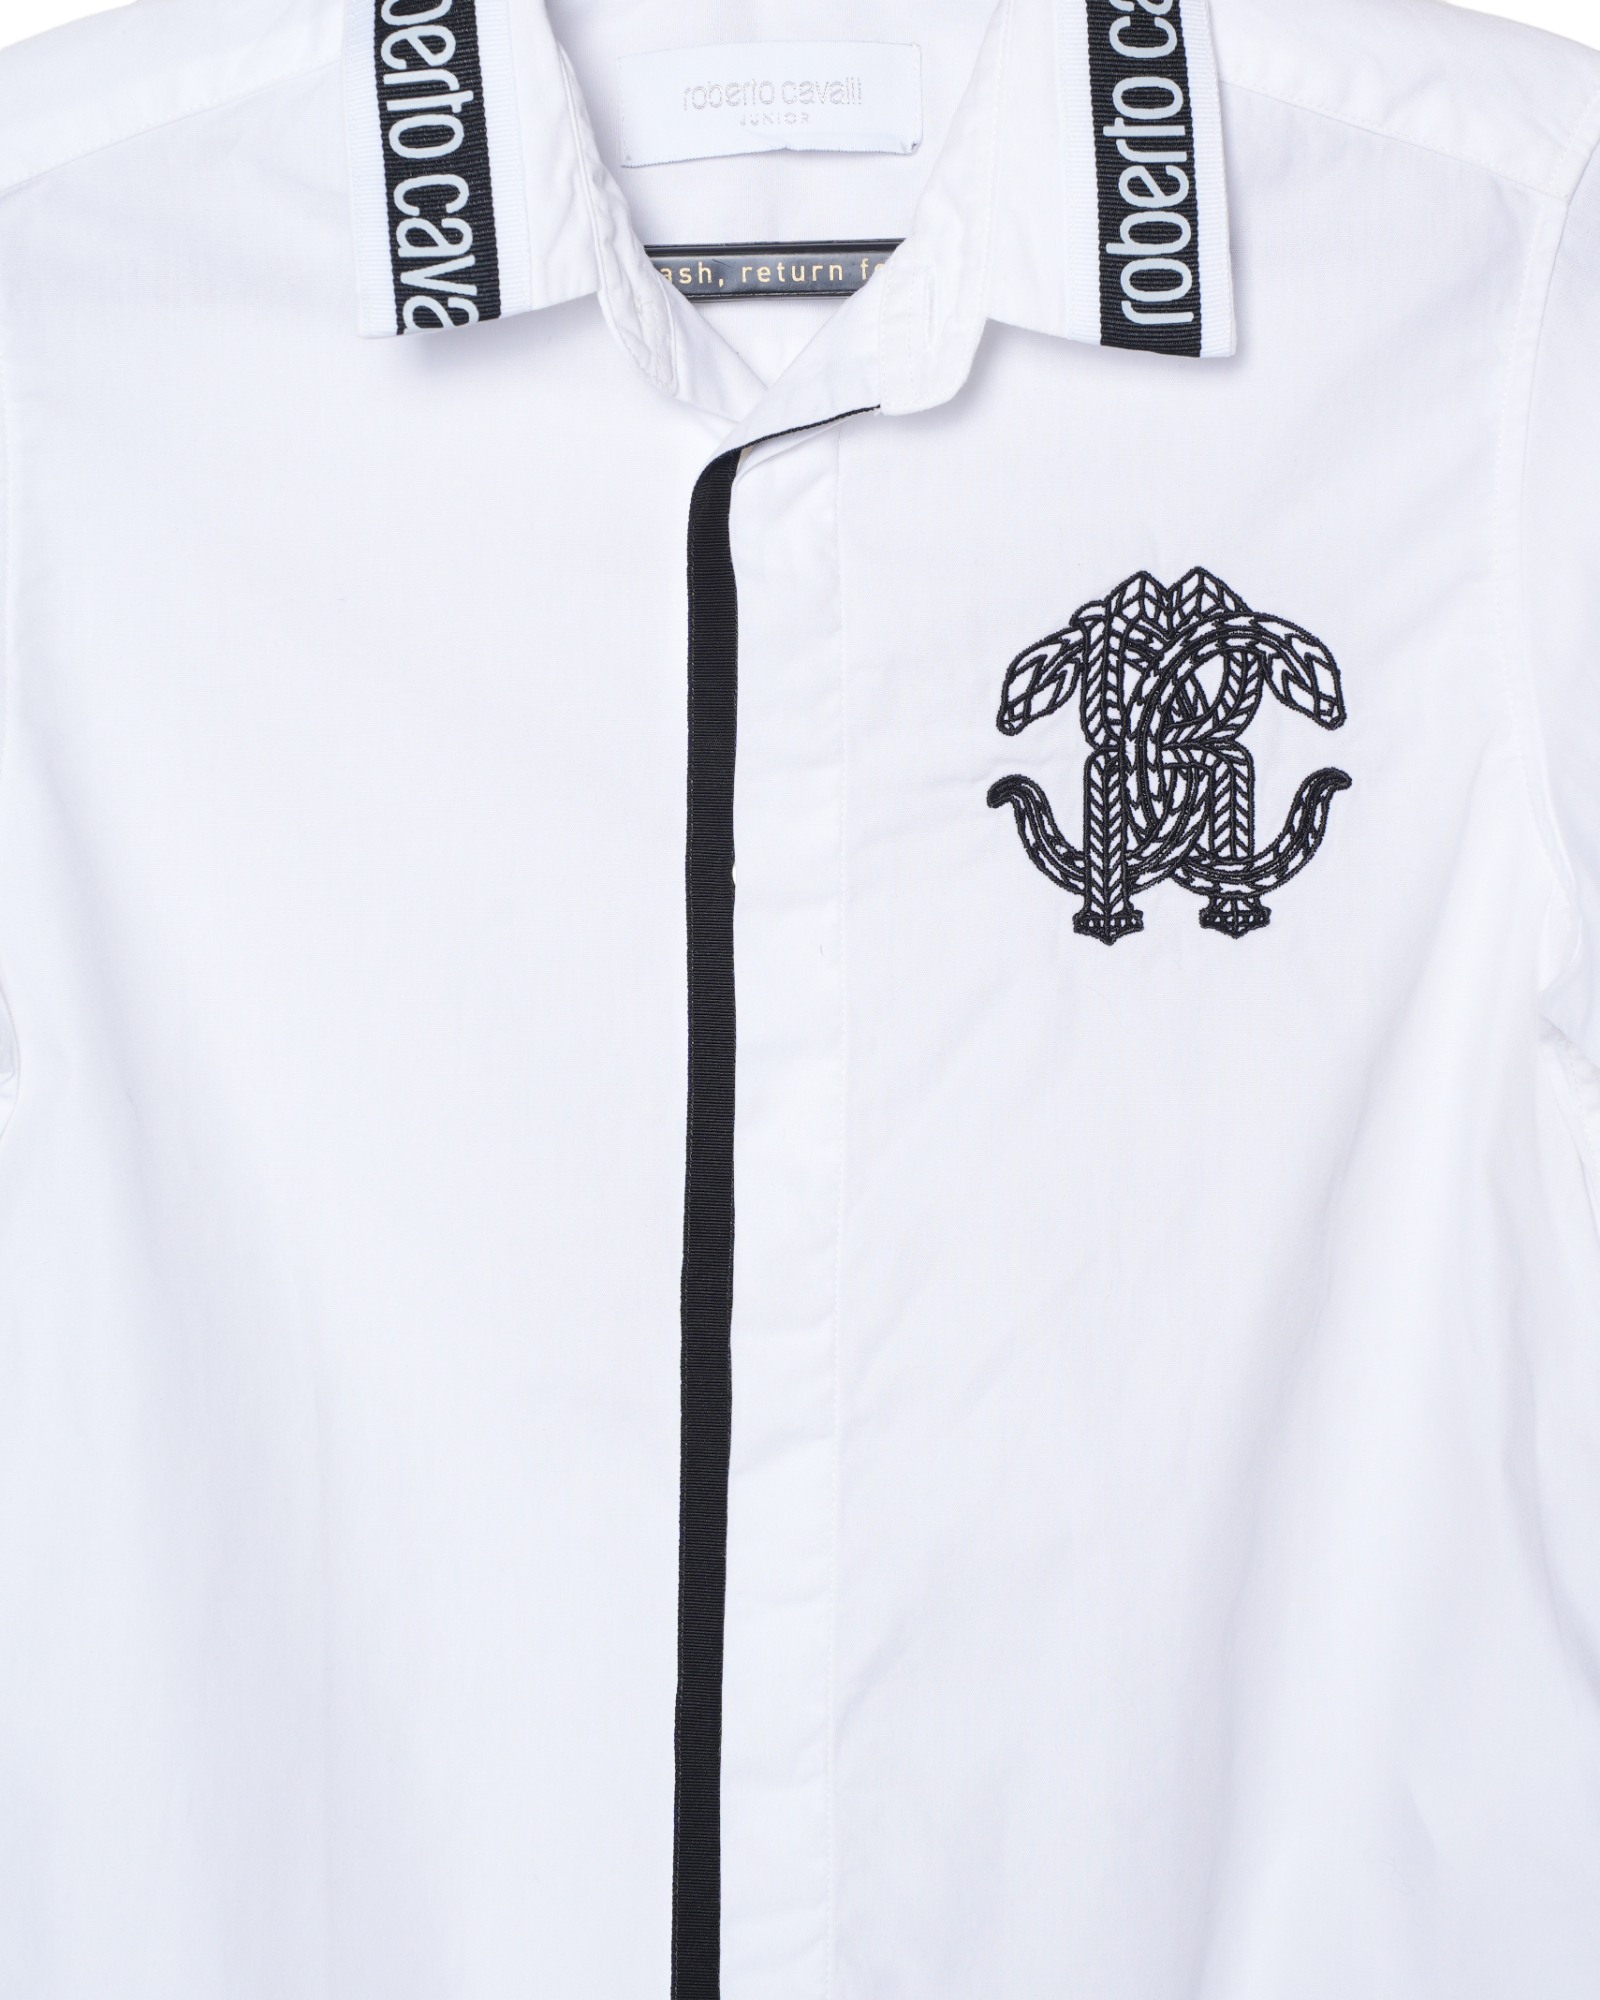 Roberto Cavalli White & Black Shirt